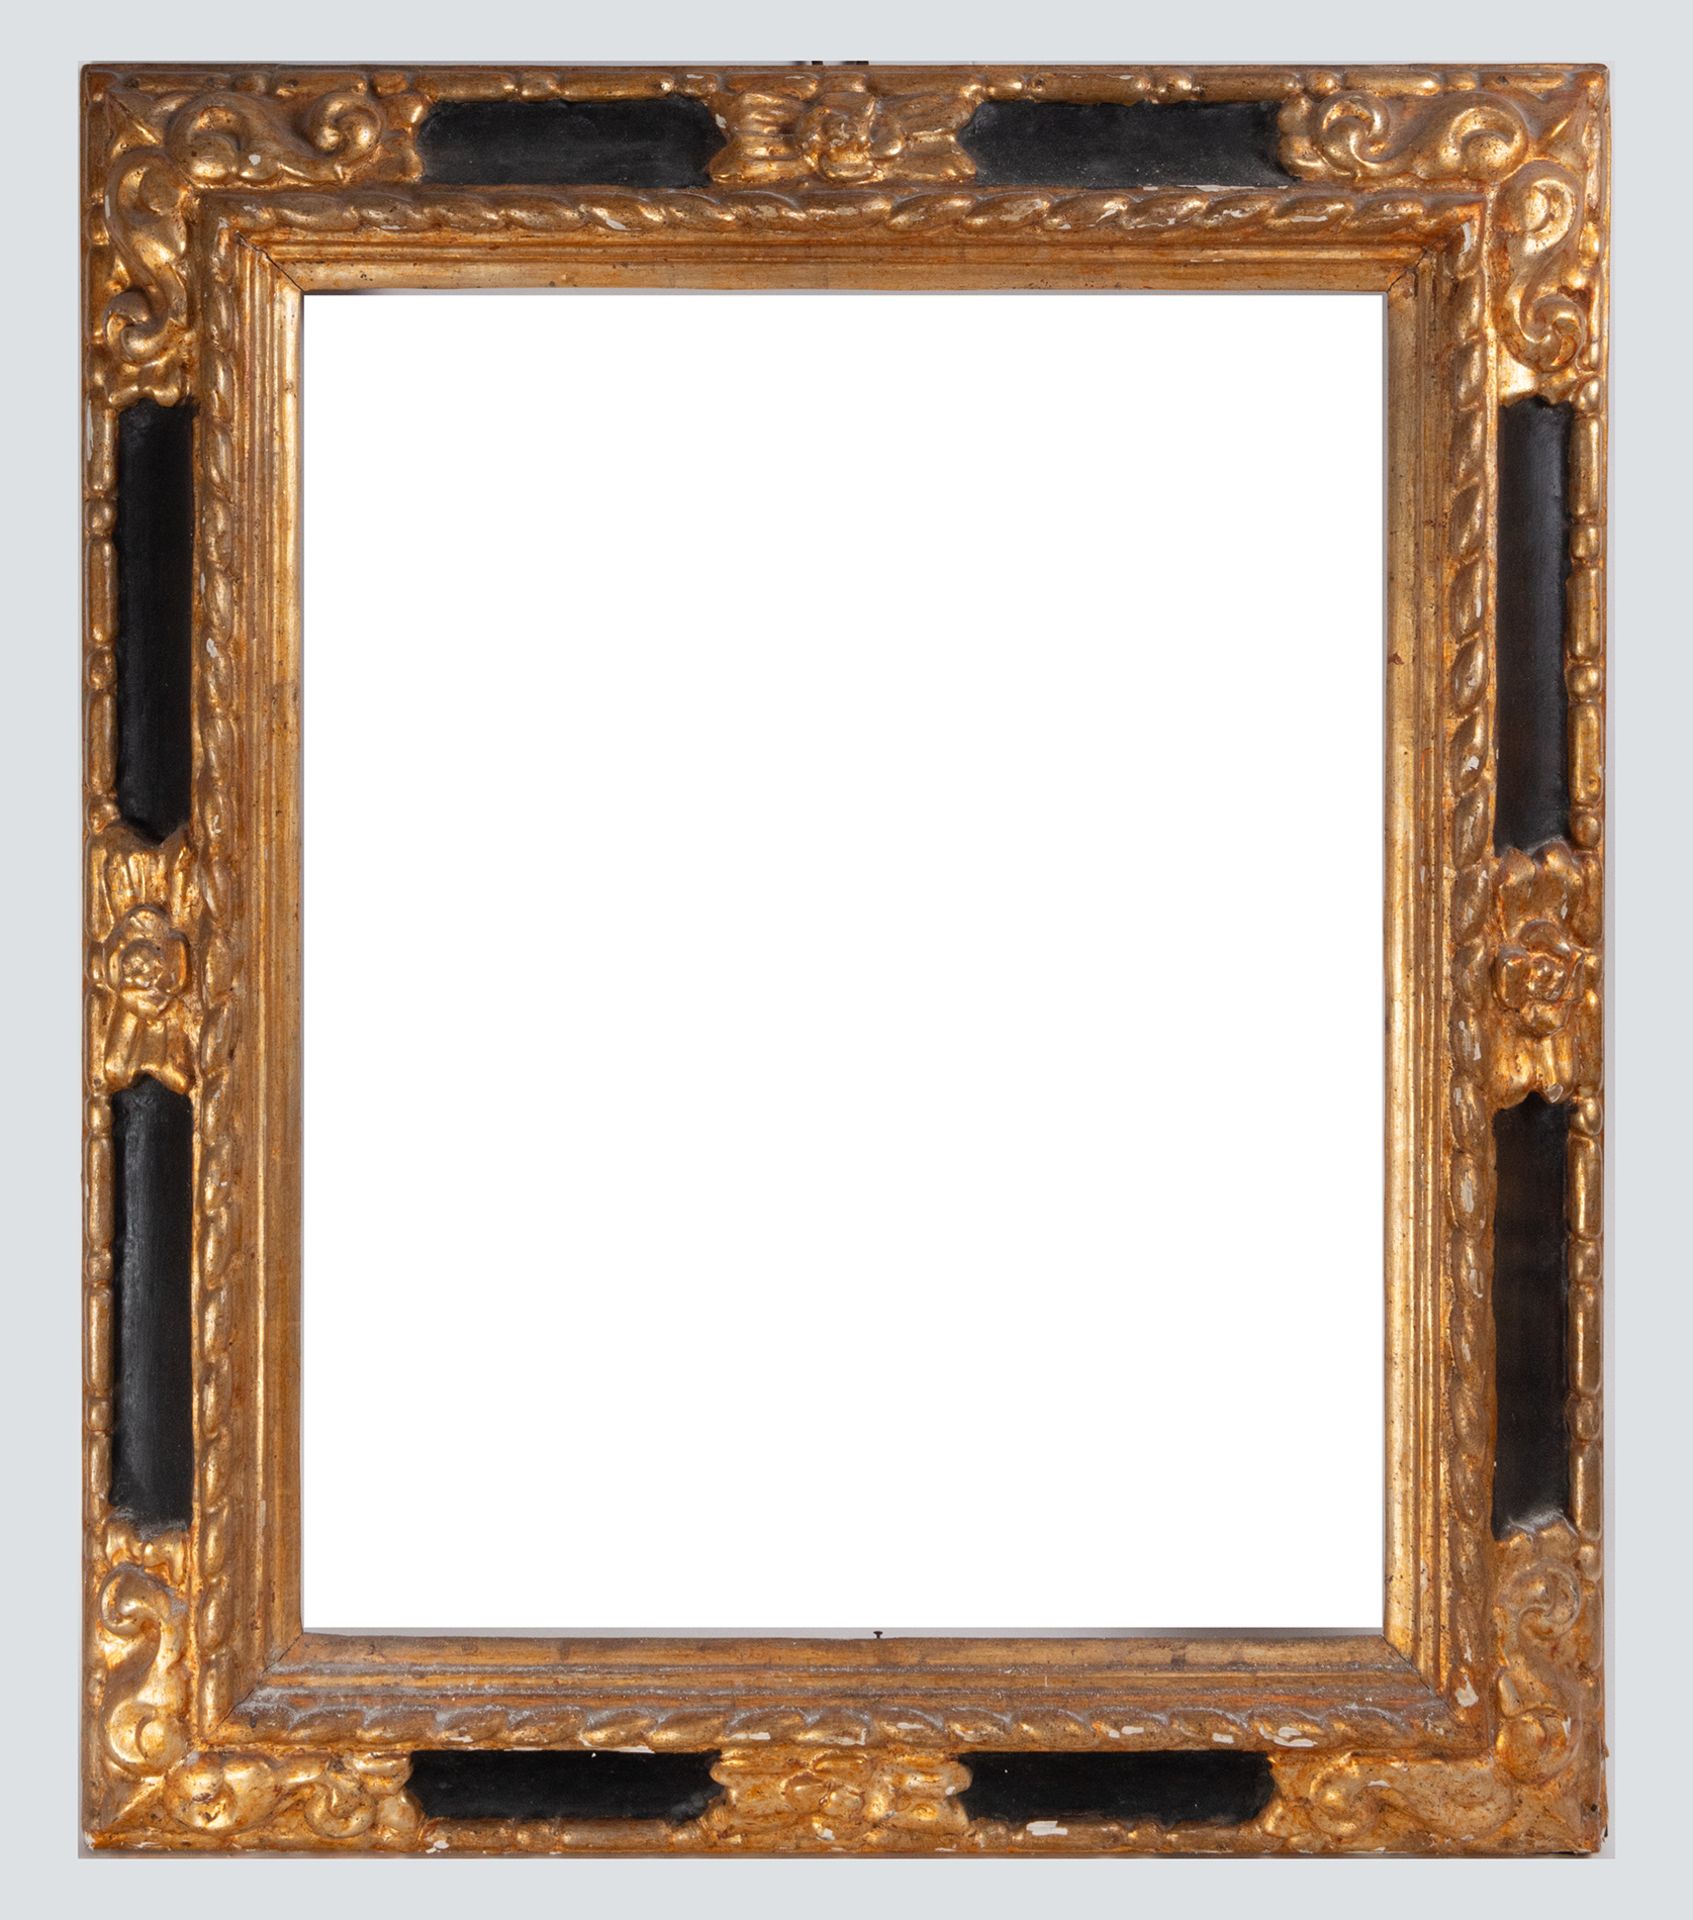 Spanish Baroque-style frame in edged, gilded, and ebonized wood